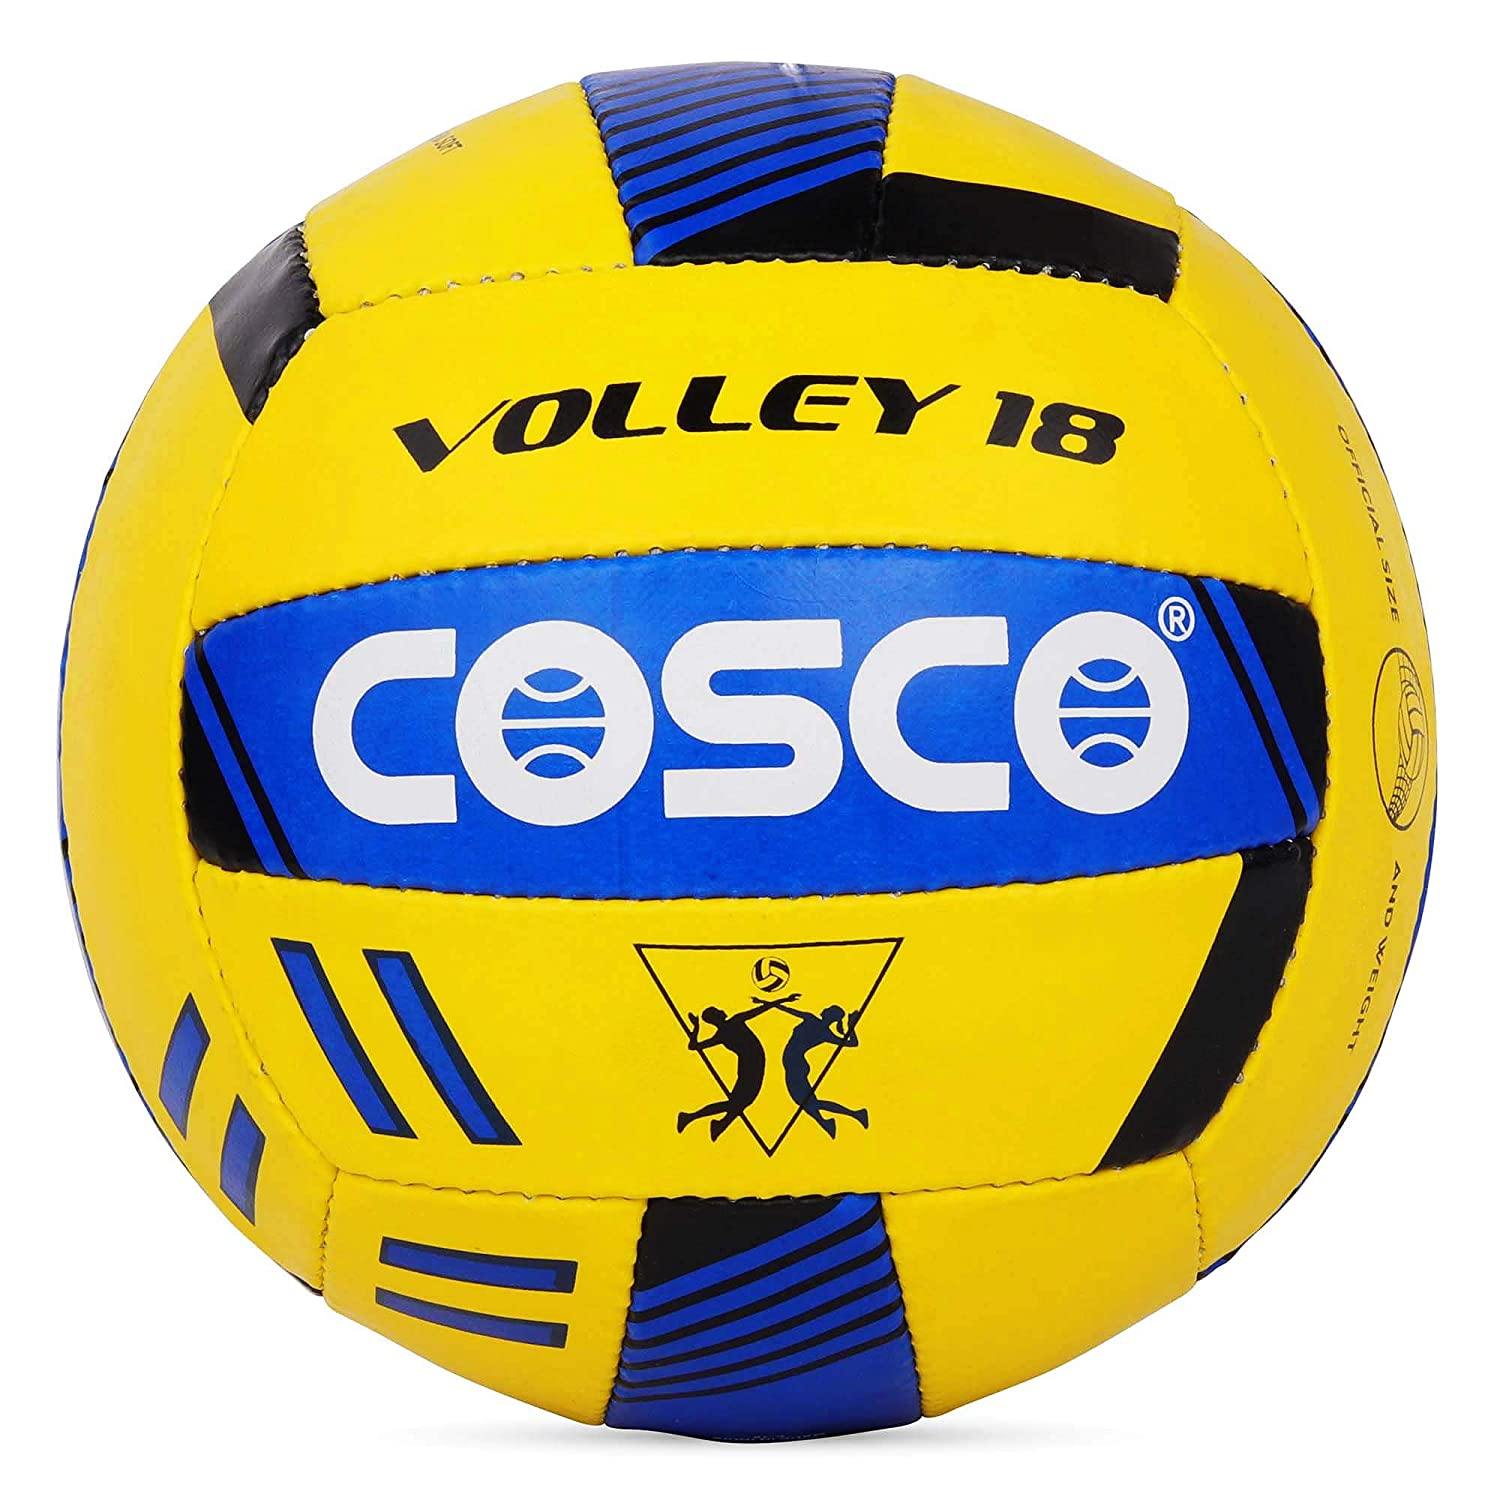 Cosco Volley 18 Volley Ball, Size 4 - Best Price online Prokicksports.com